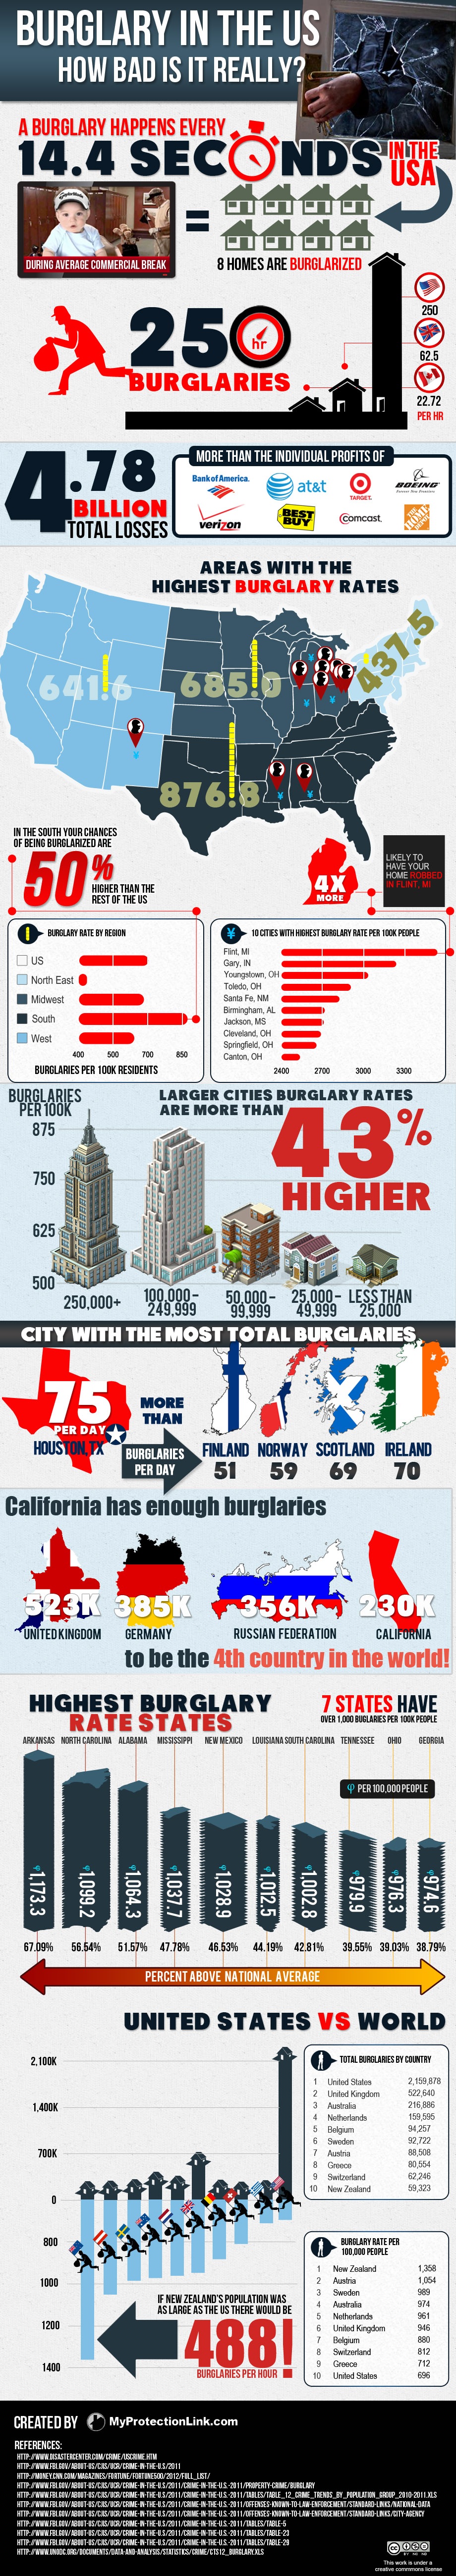 Burglaries in the US Infographic